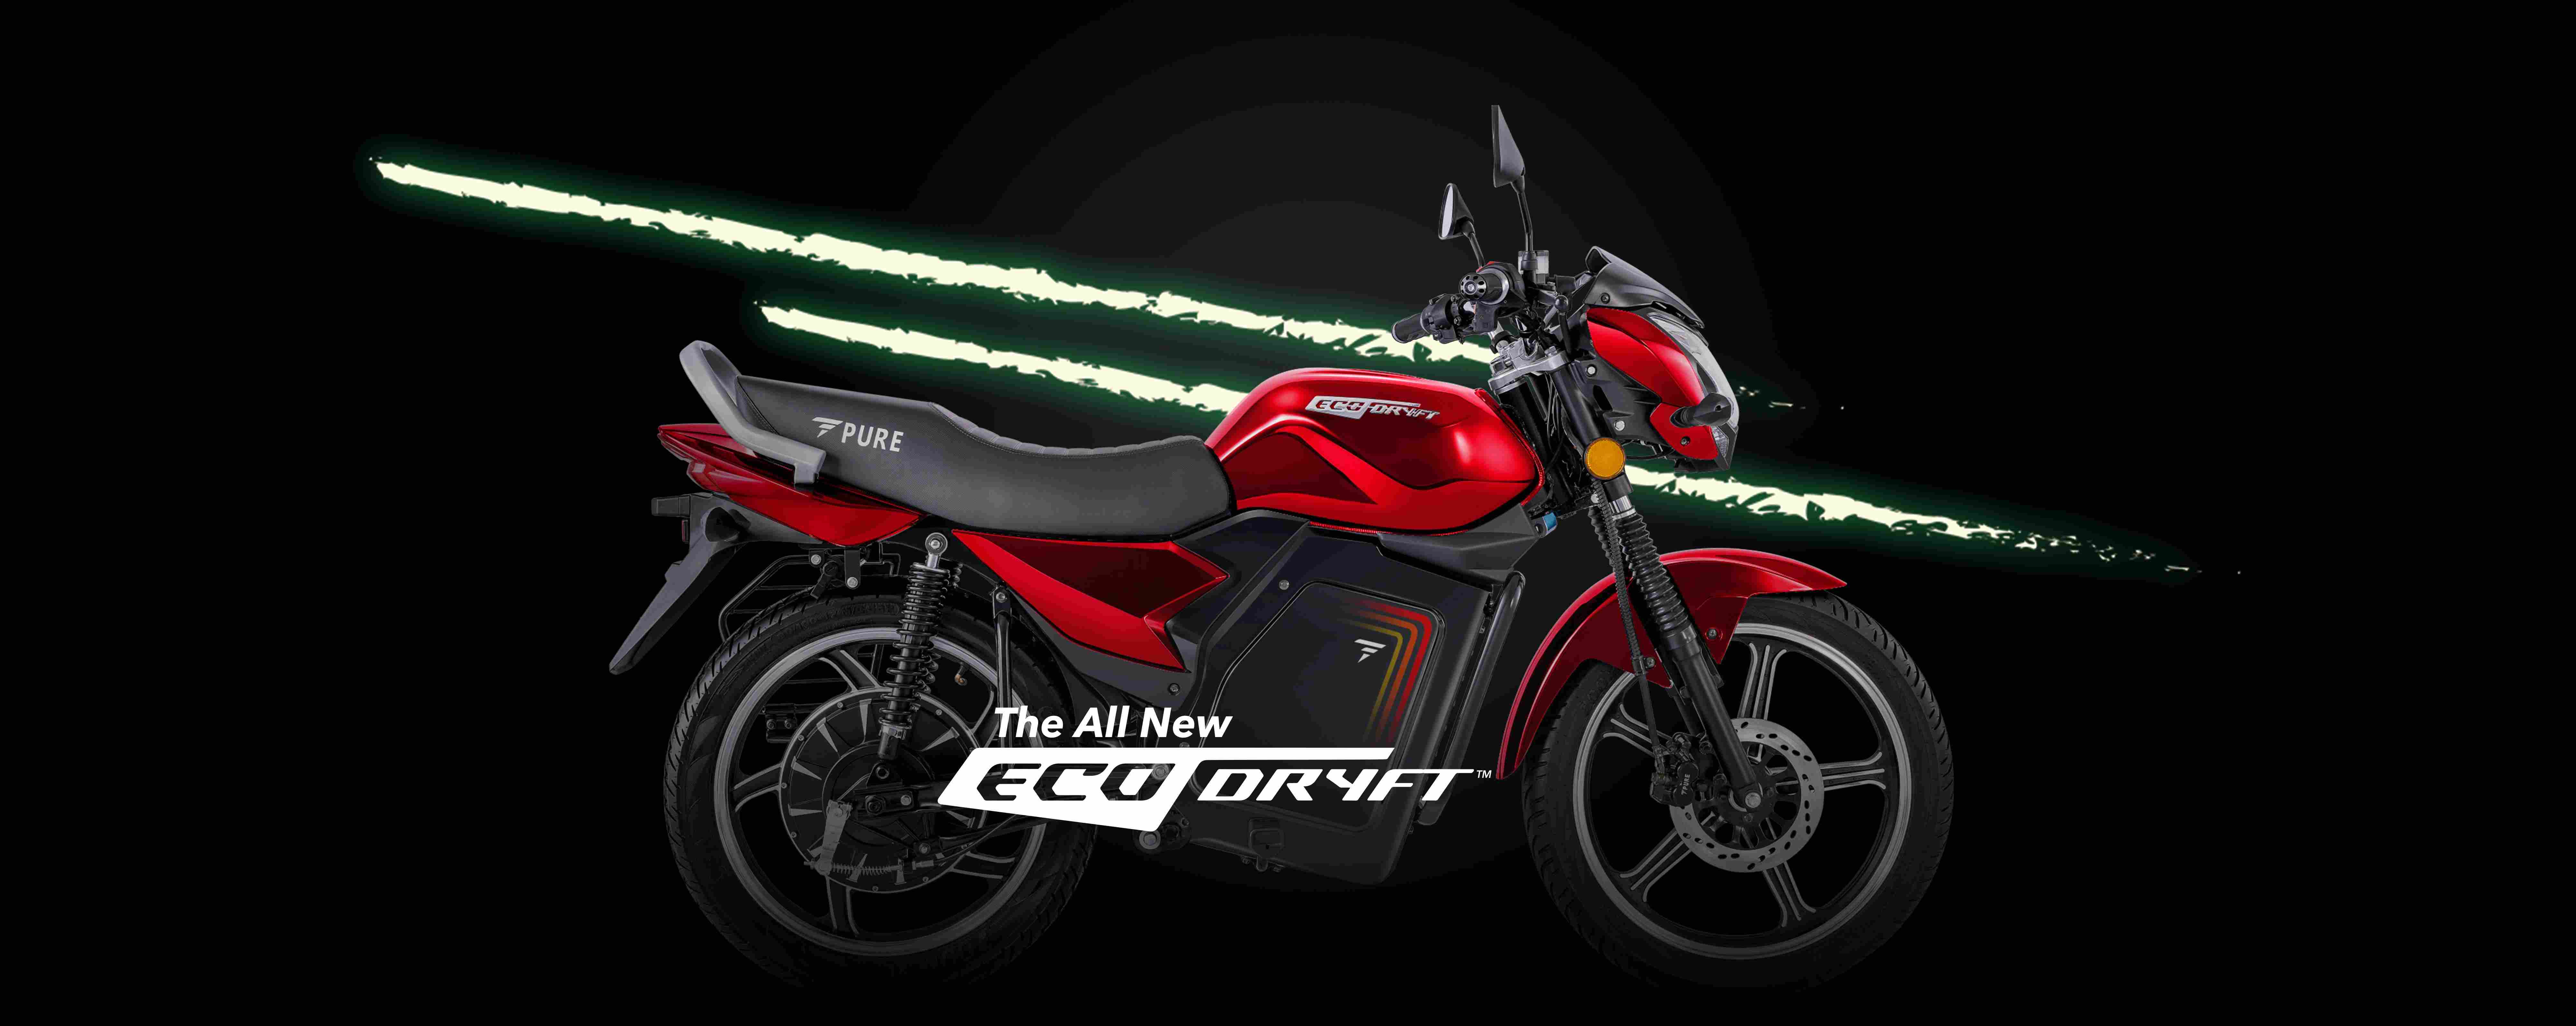 Pure EV ecoDryft - Red